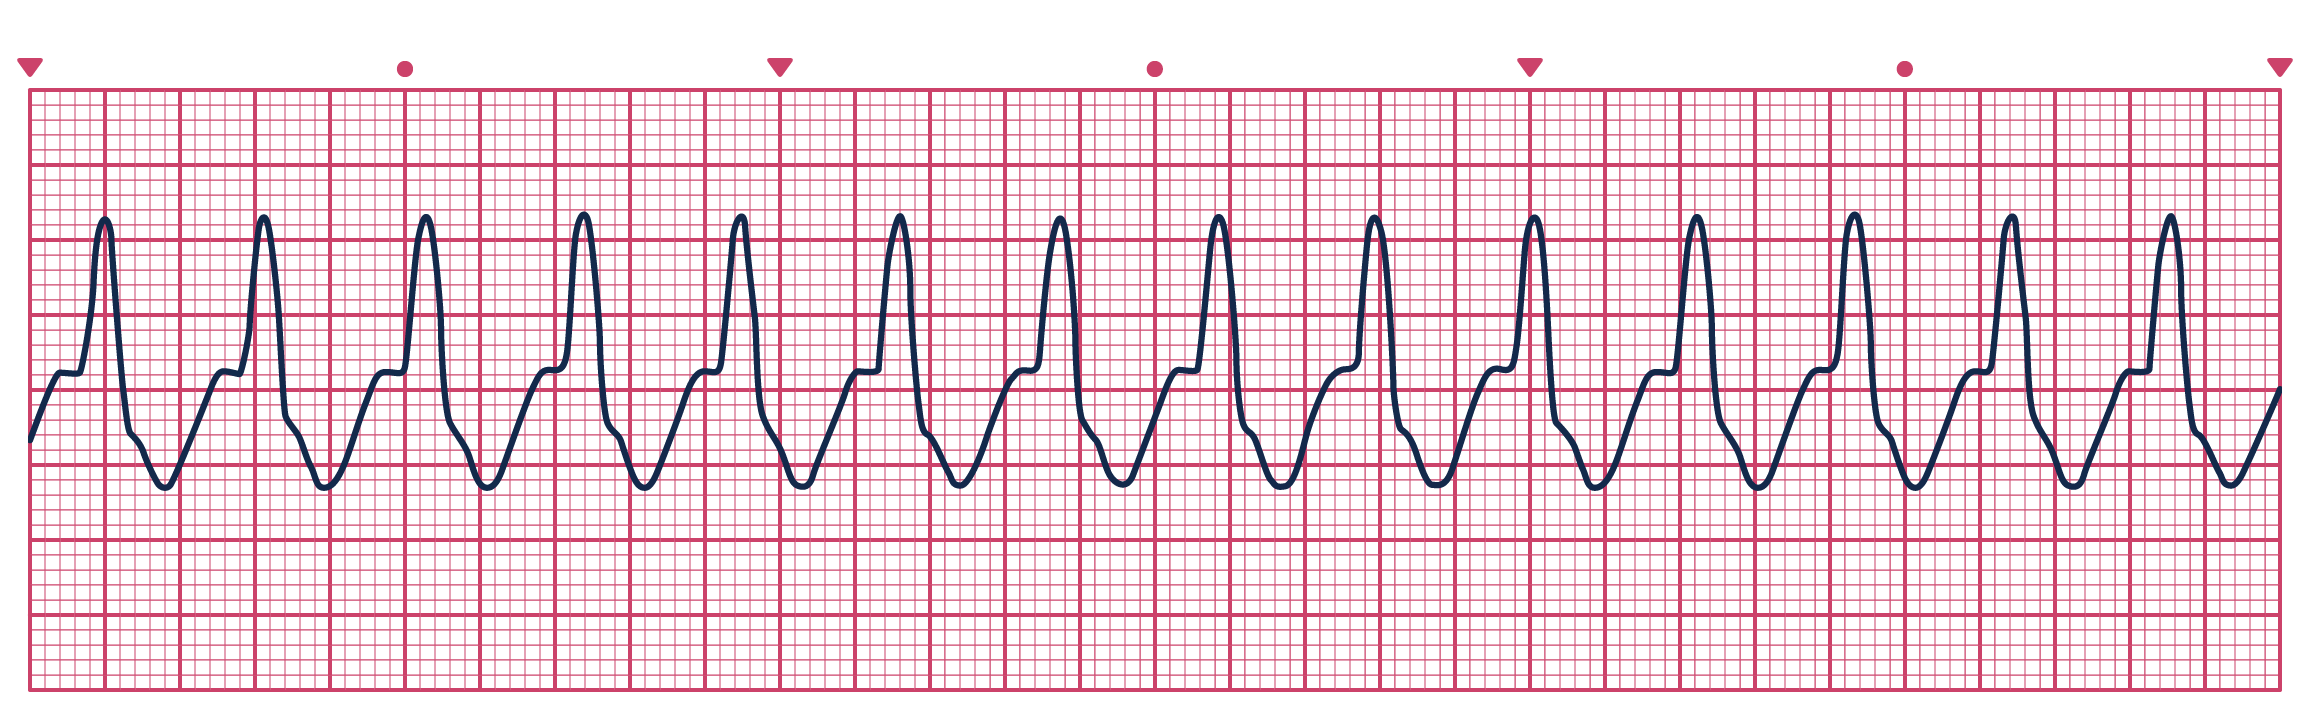 An ECG depicting Ventricular Tachycardia